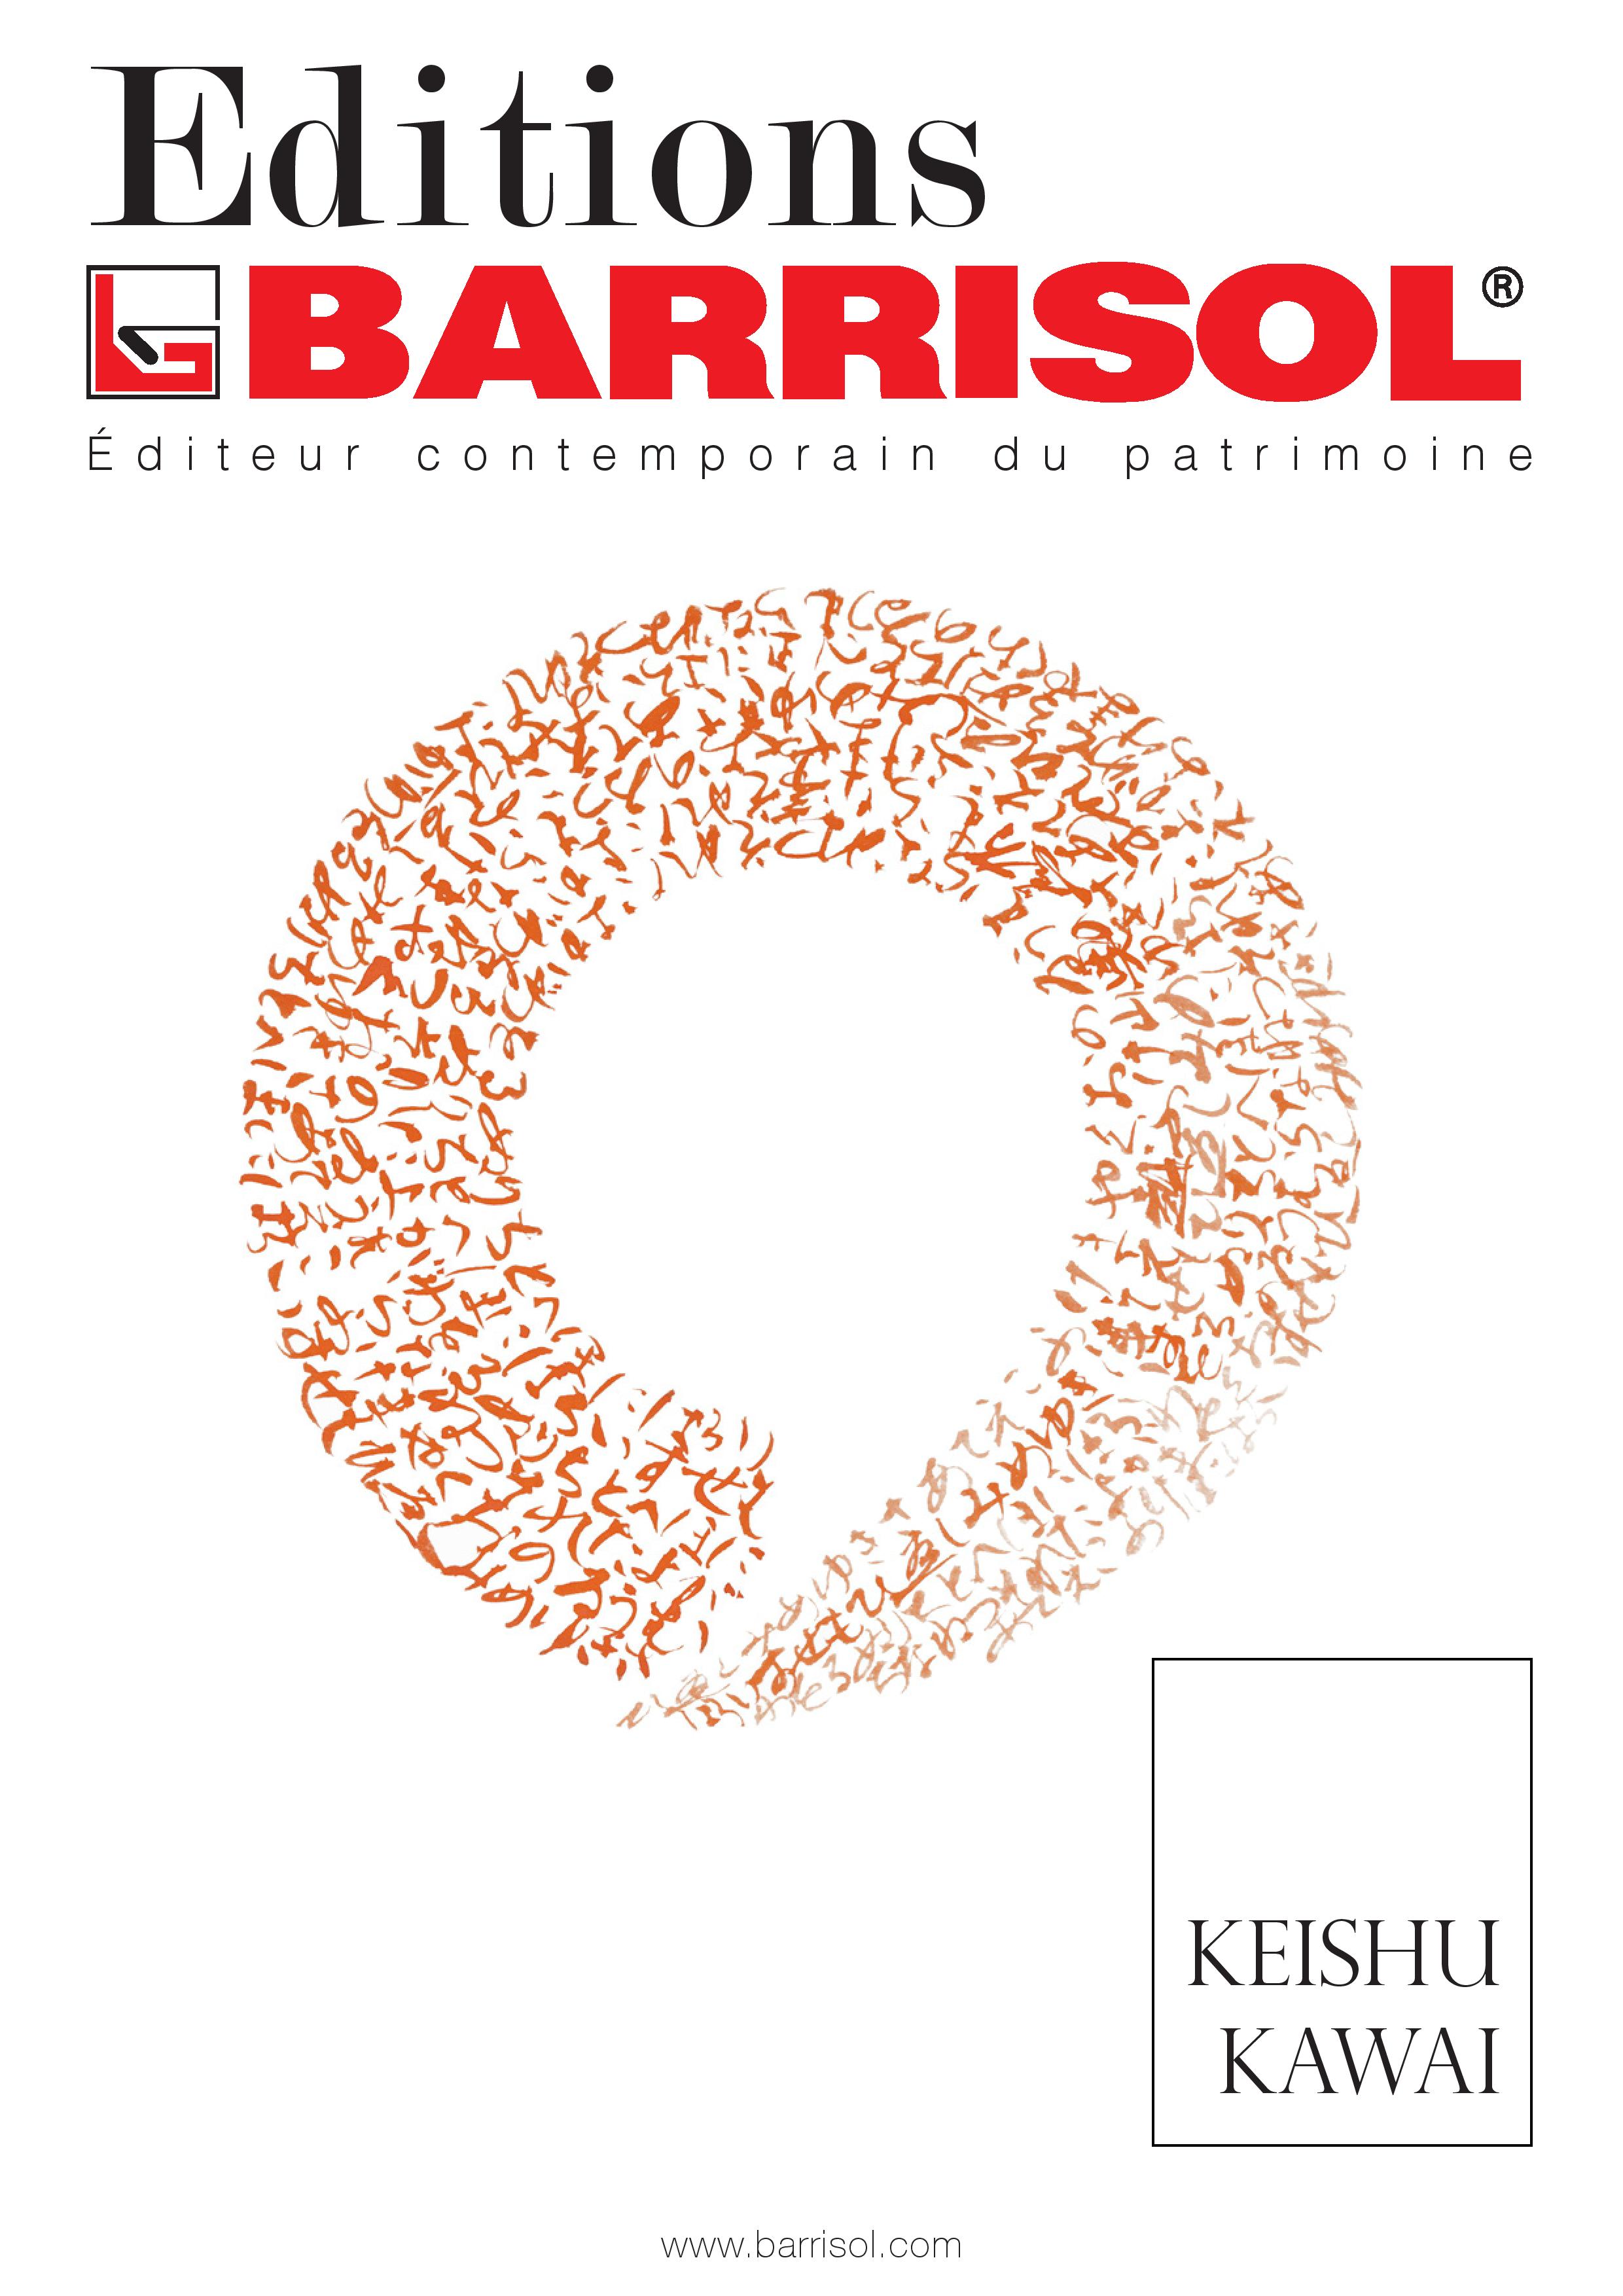 Editions BARRISOL - Katalog Keishu Kawai